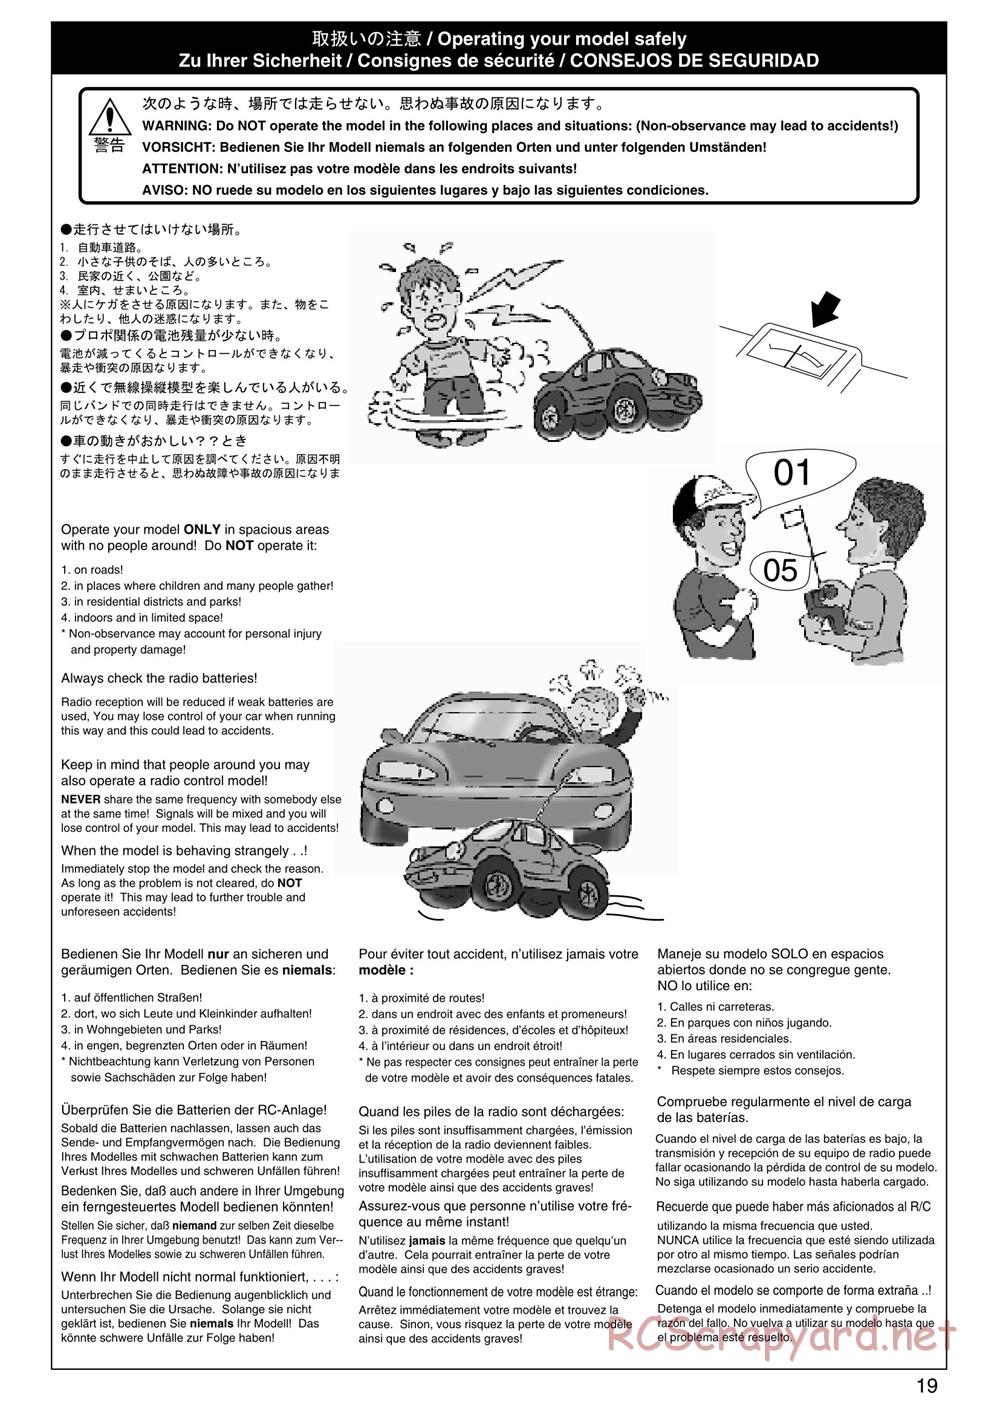 Kyosho - PureTen EP Alpha 3 - Manual - Page 19